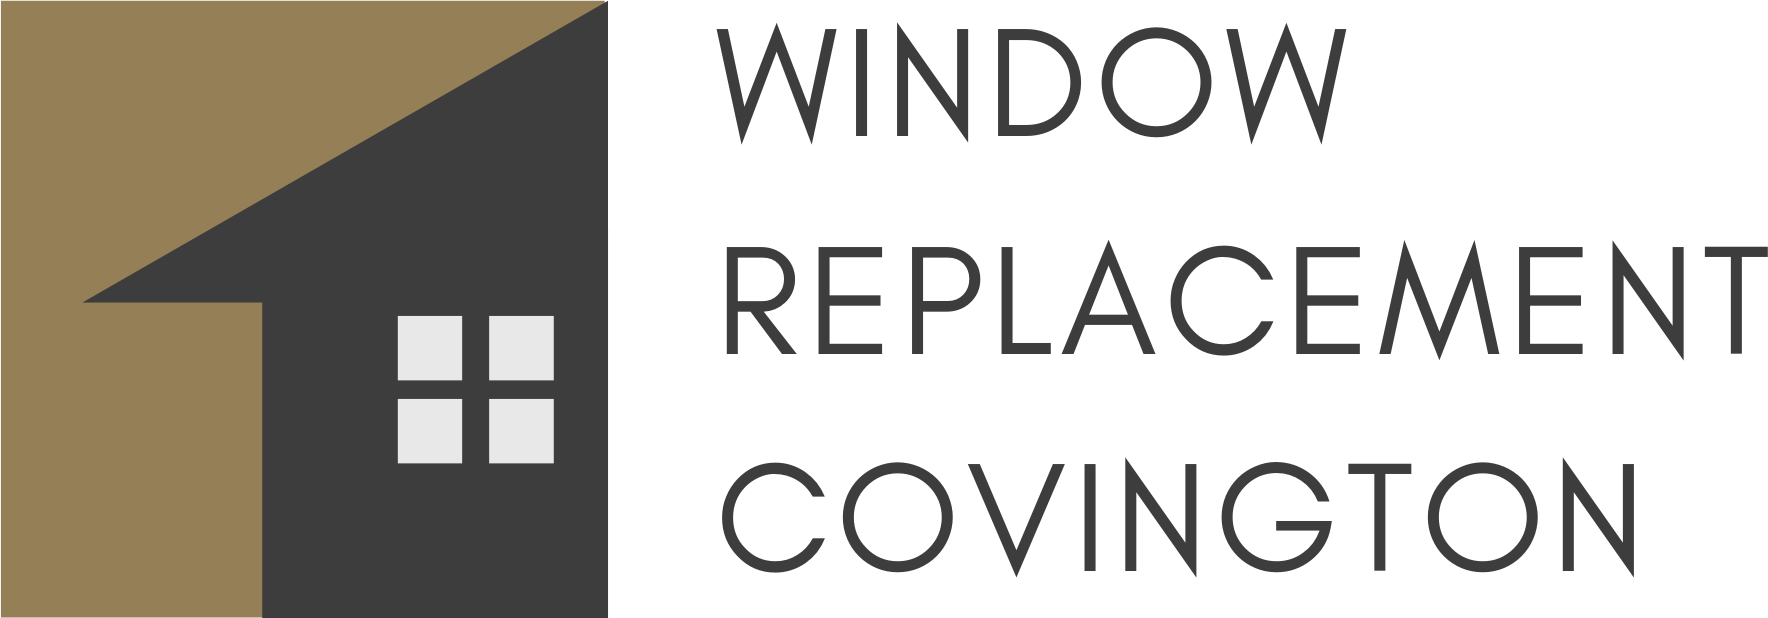 Window Replacement Covington – The Best Window and Door Replacement Service in Covington LA